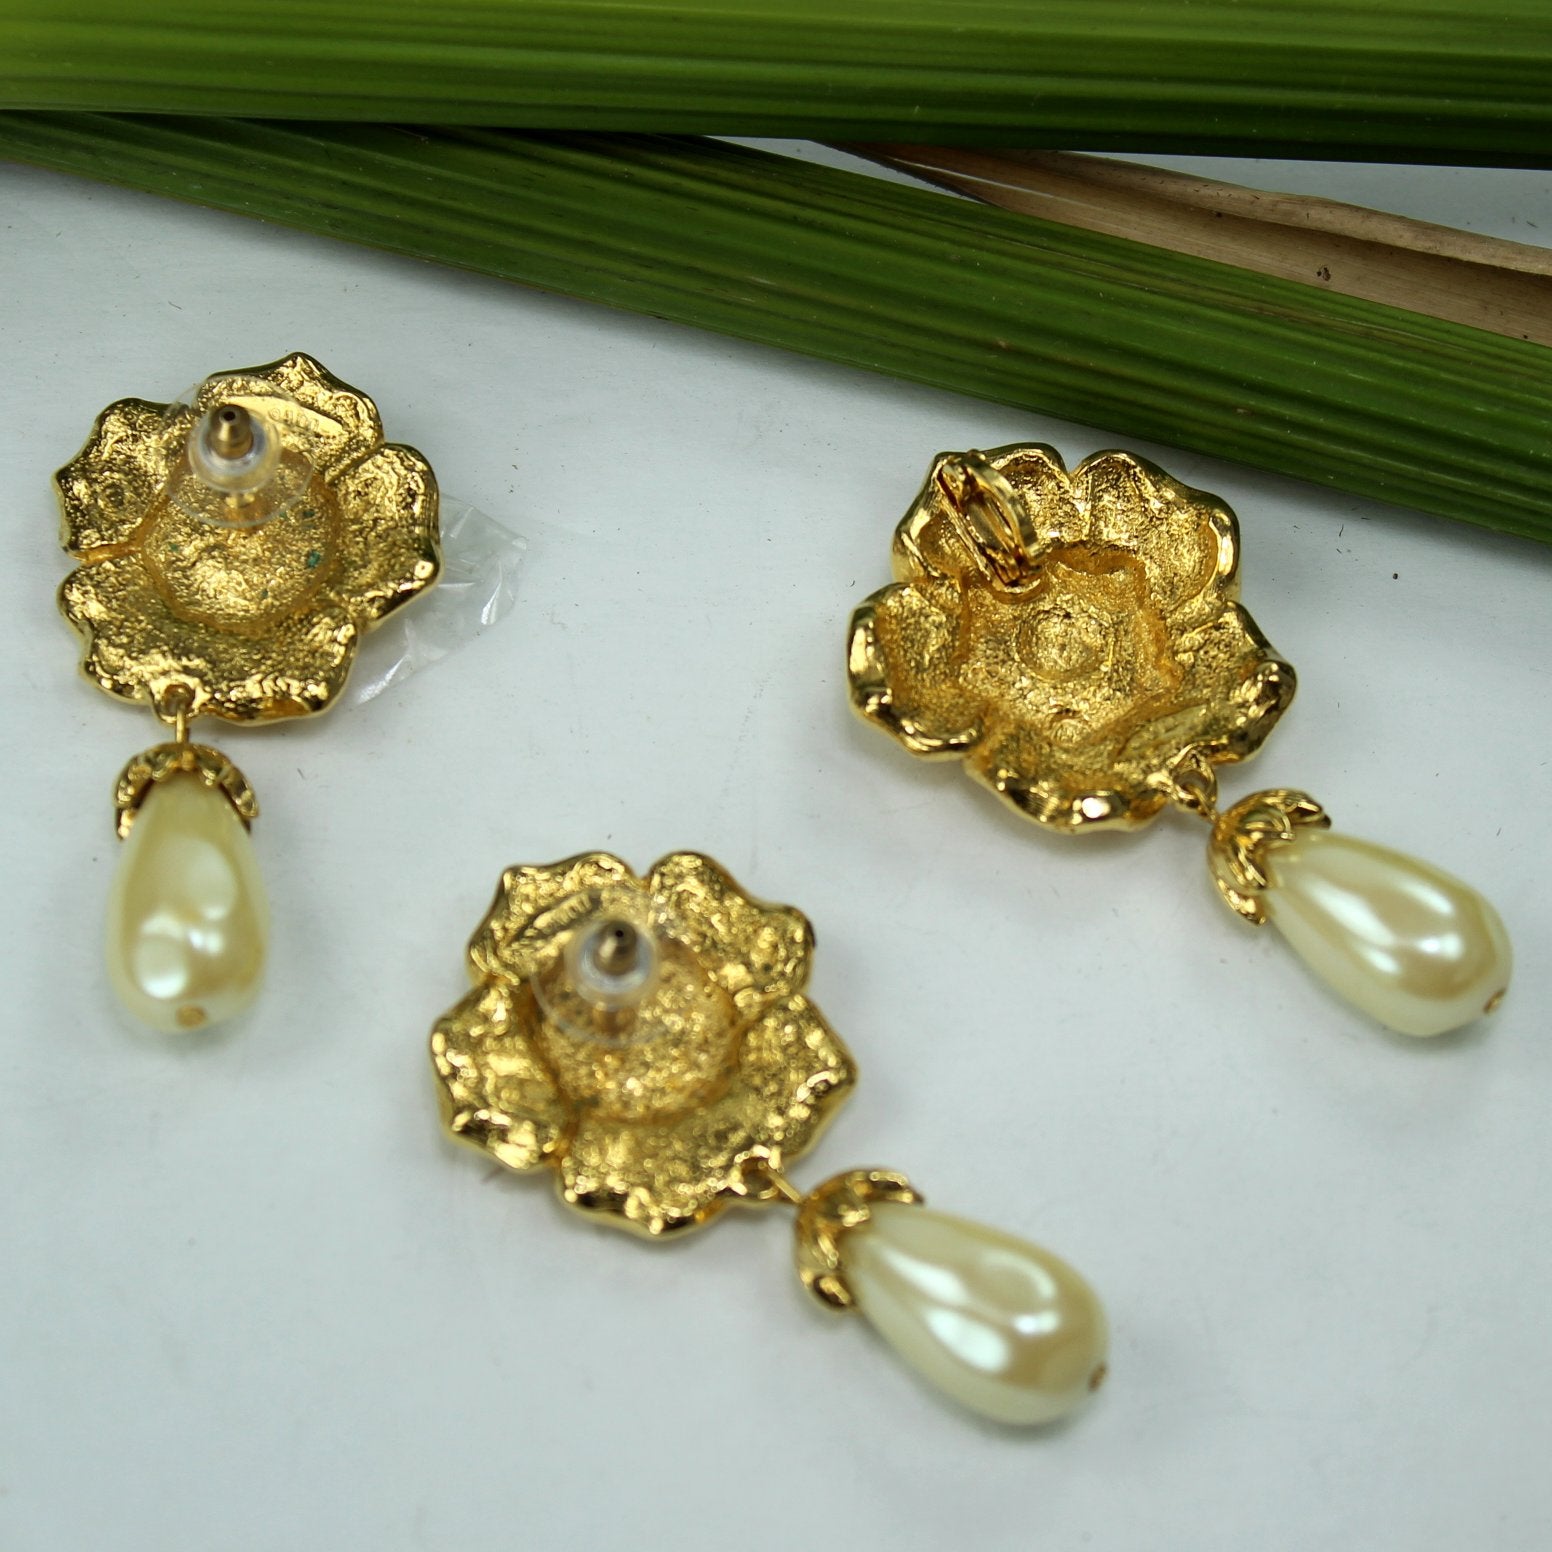 Summerset Avon Earrings Locking Pendant Gold Baroque Pearl Rare Find Set reverse view